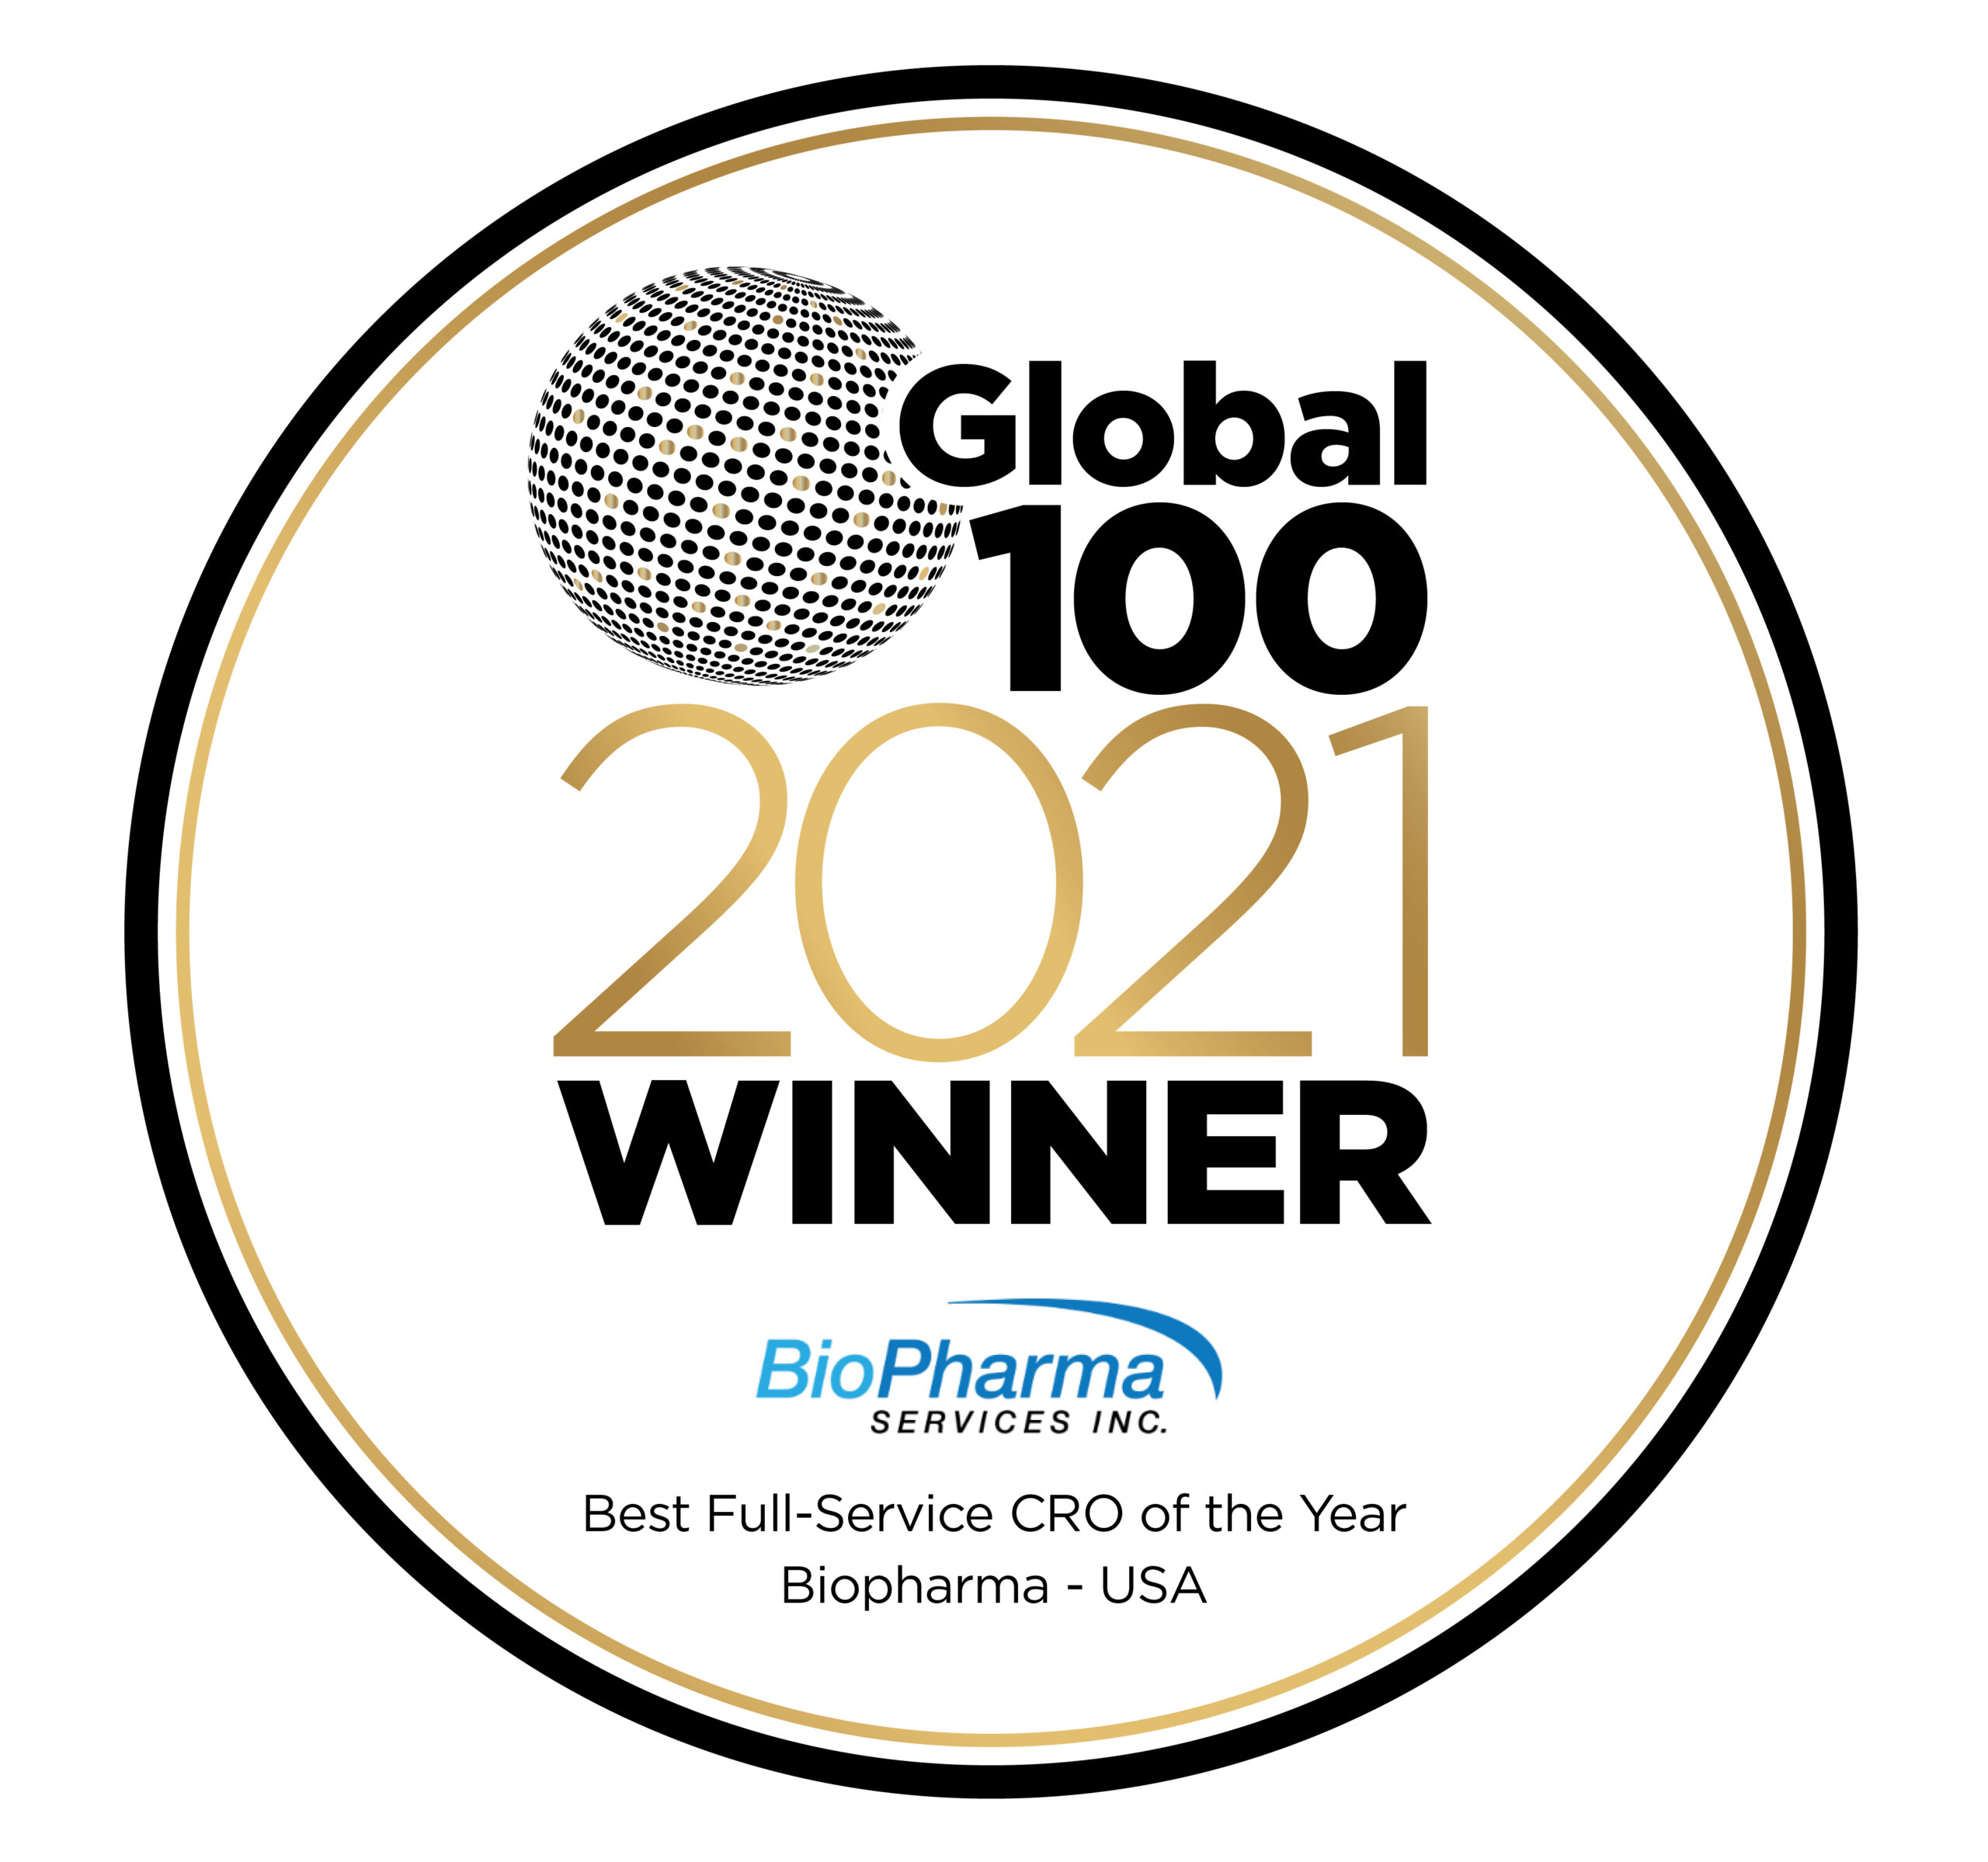 Global 100 Award logo